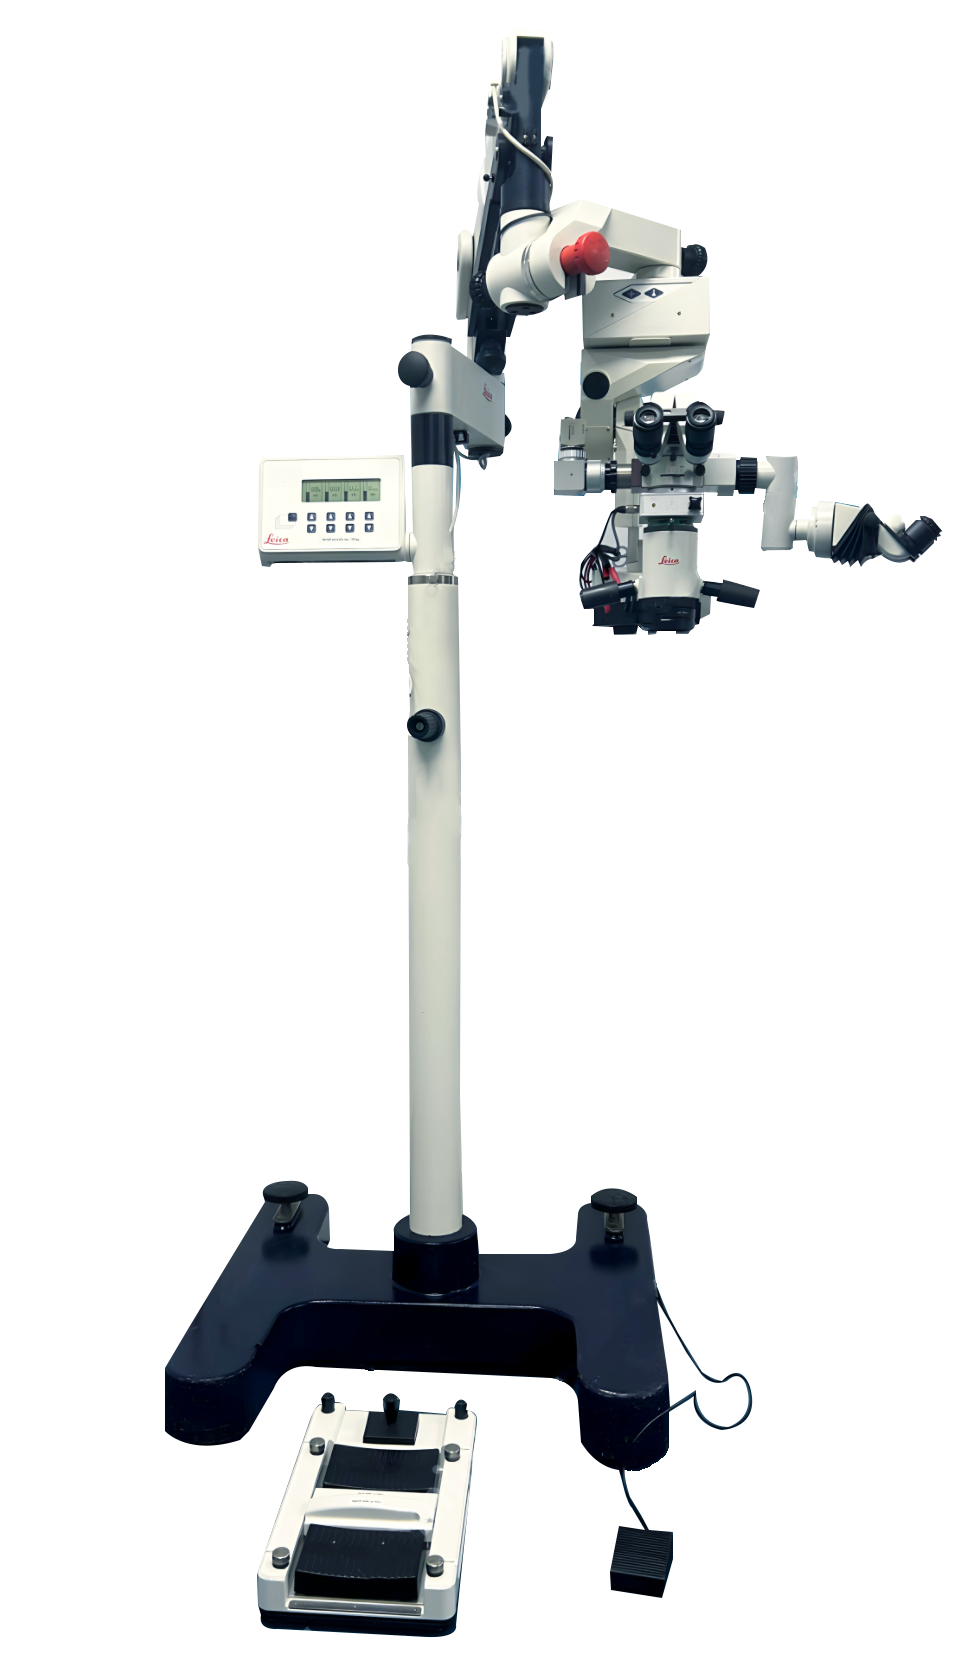 Leica M841 Surgical Microscope